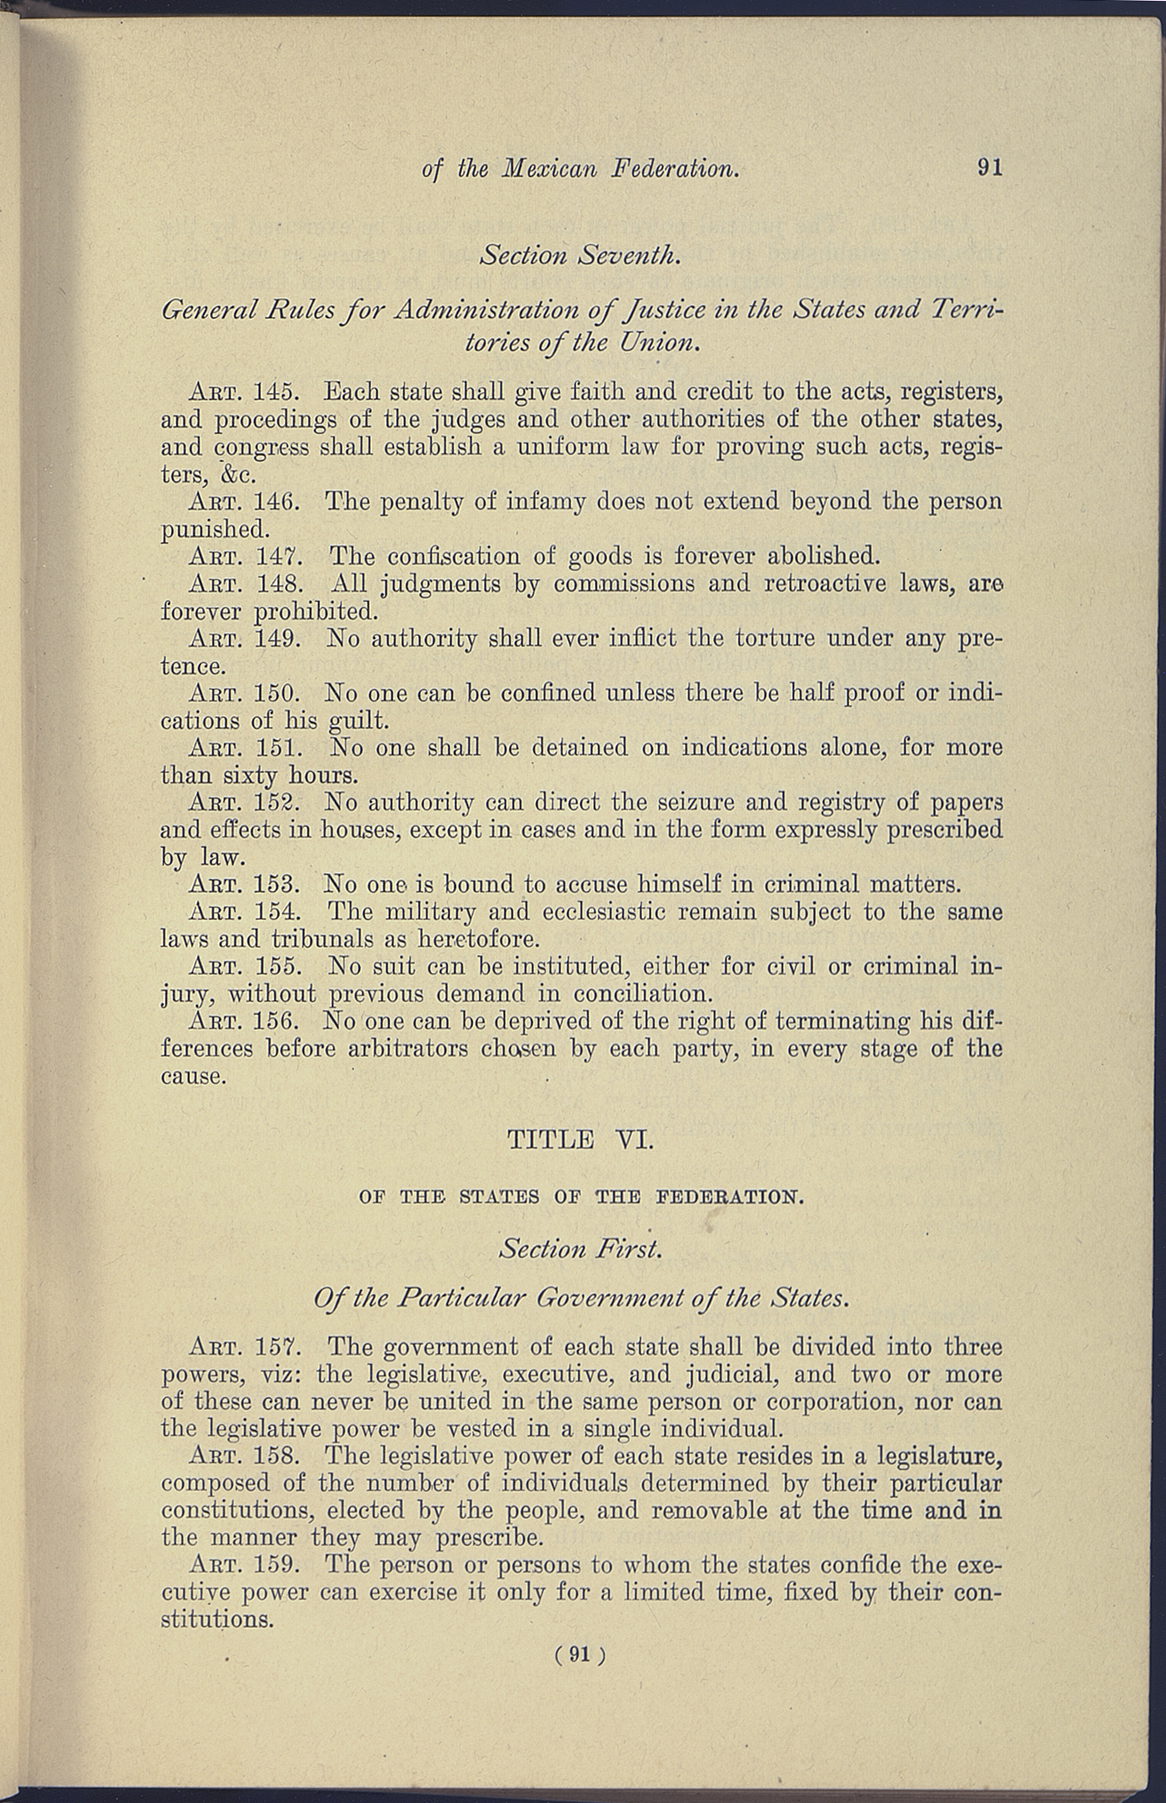 Title VI, Section 1, Article 157-159